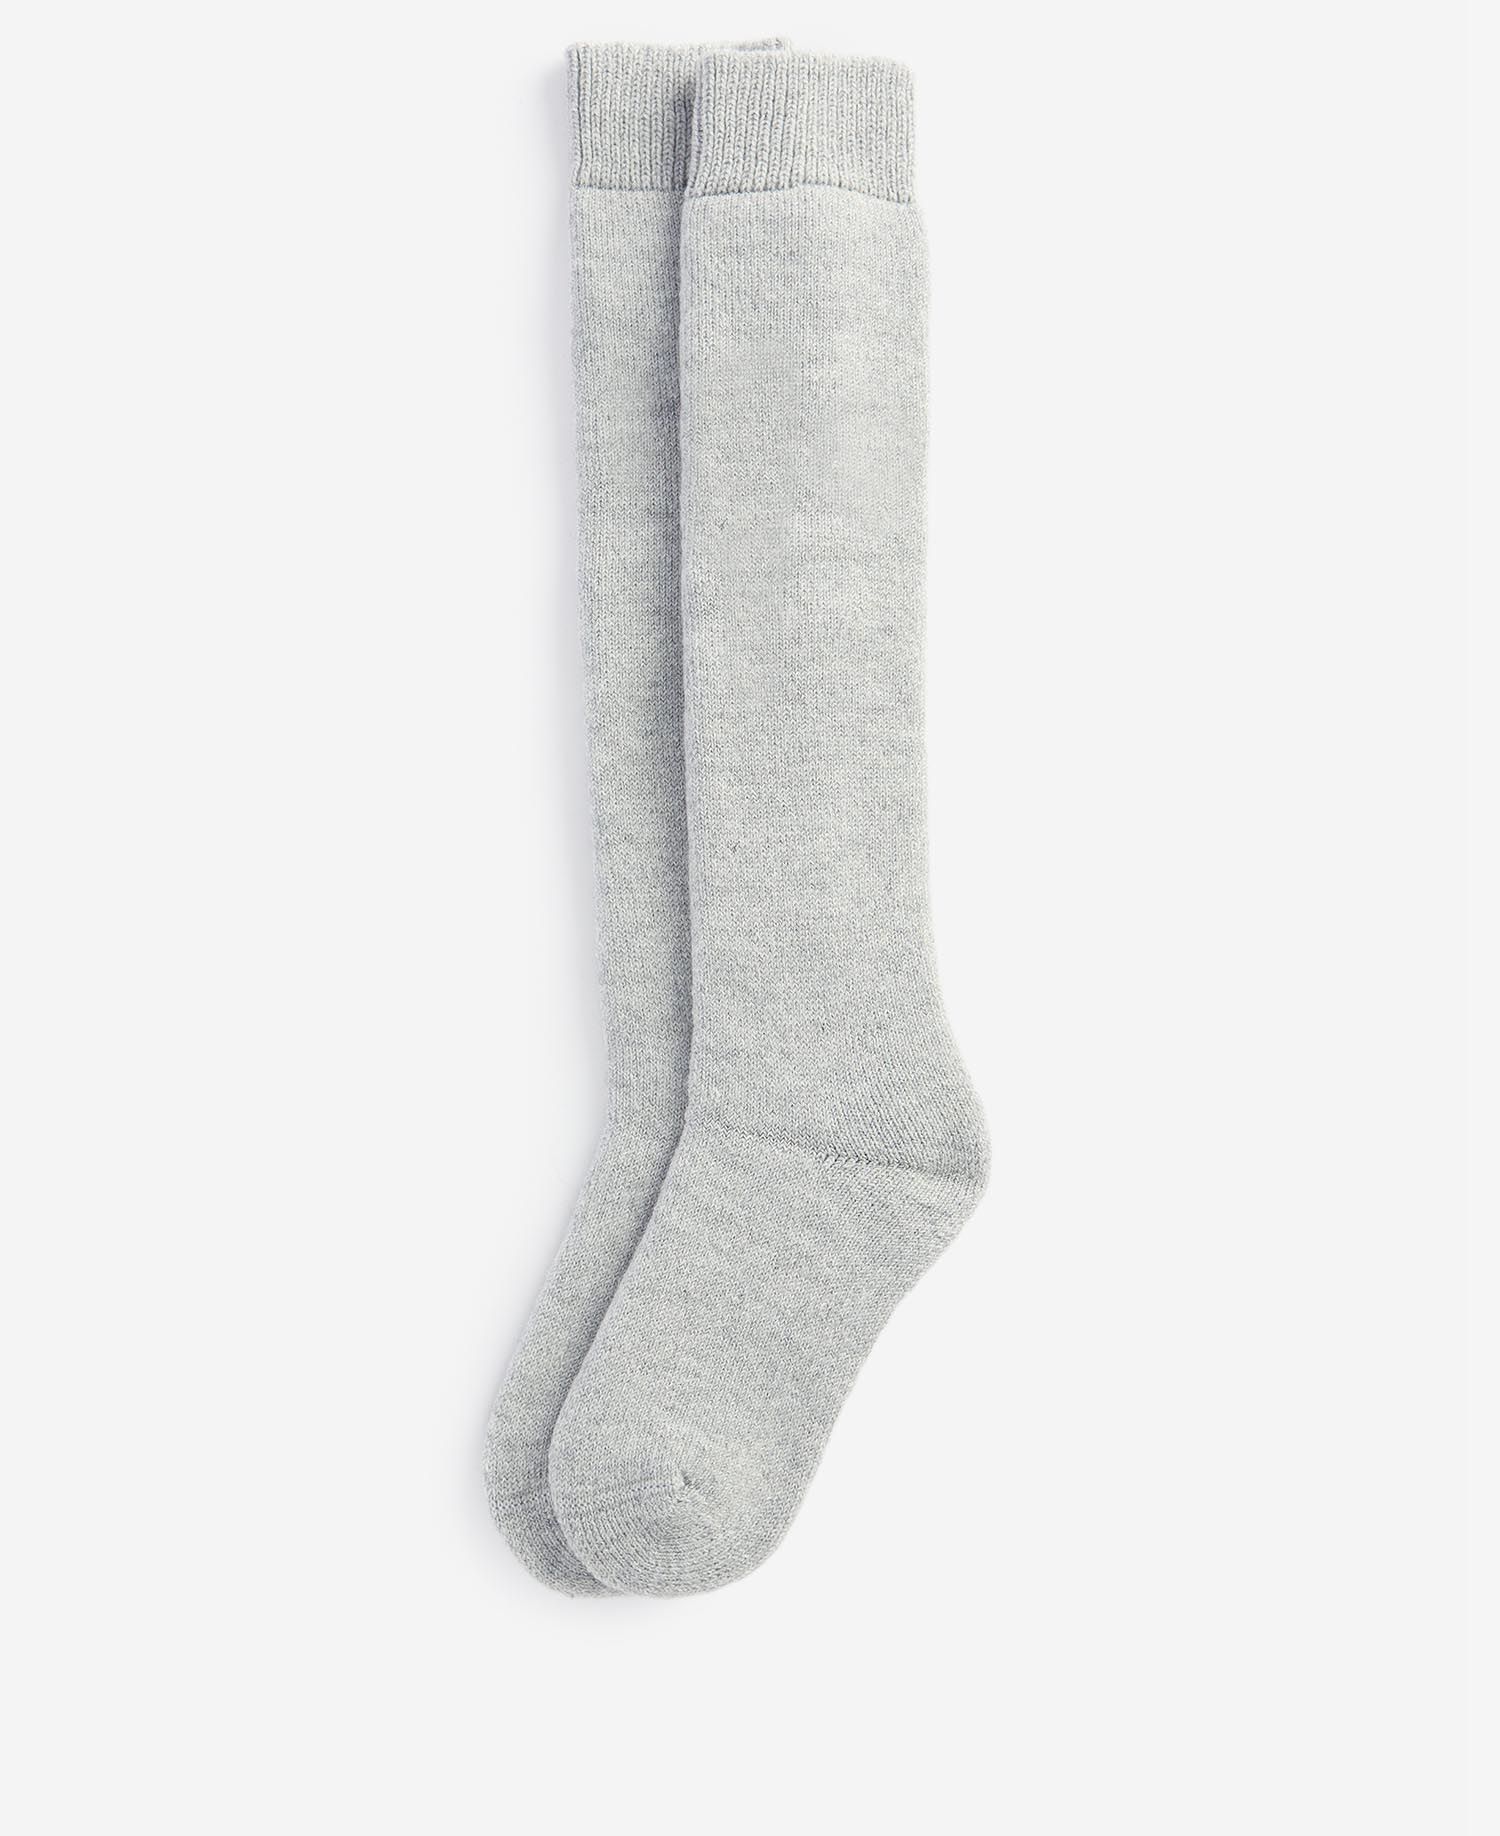 Barbour Wellington Knee-High Socks